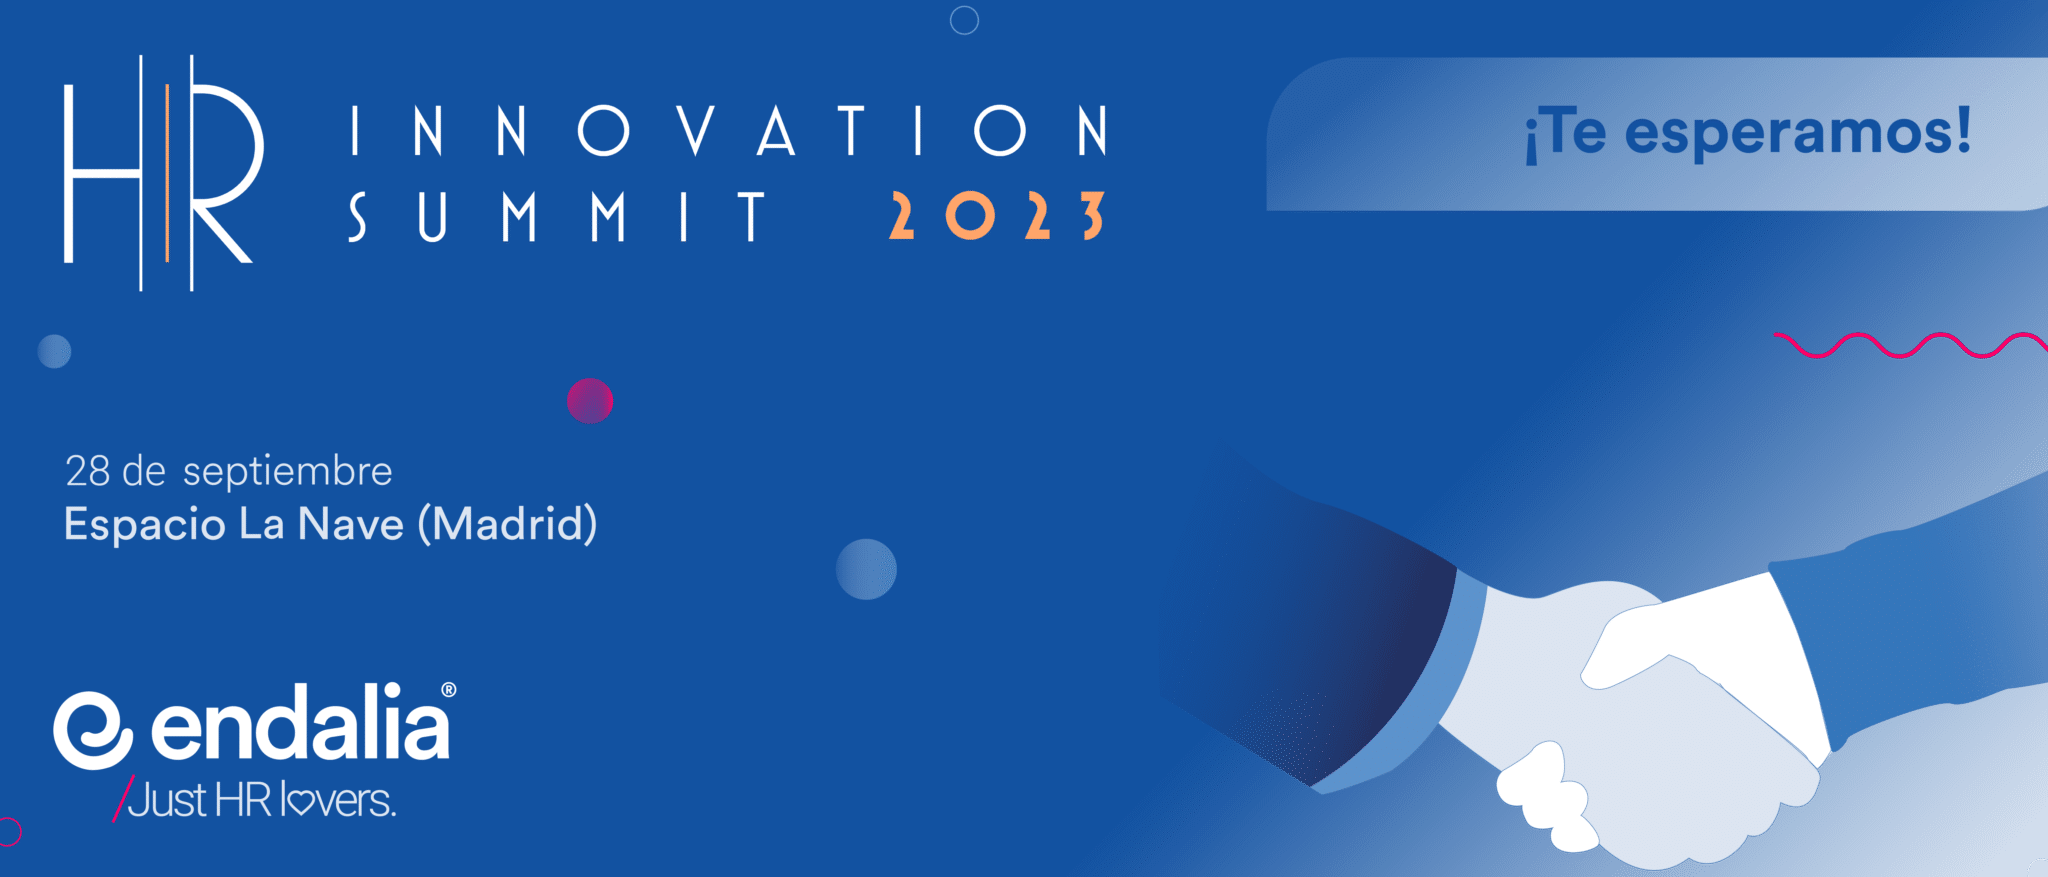 ok Endalia estará presente en HR Innovation Summit 2023